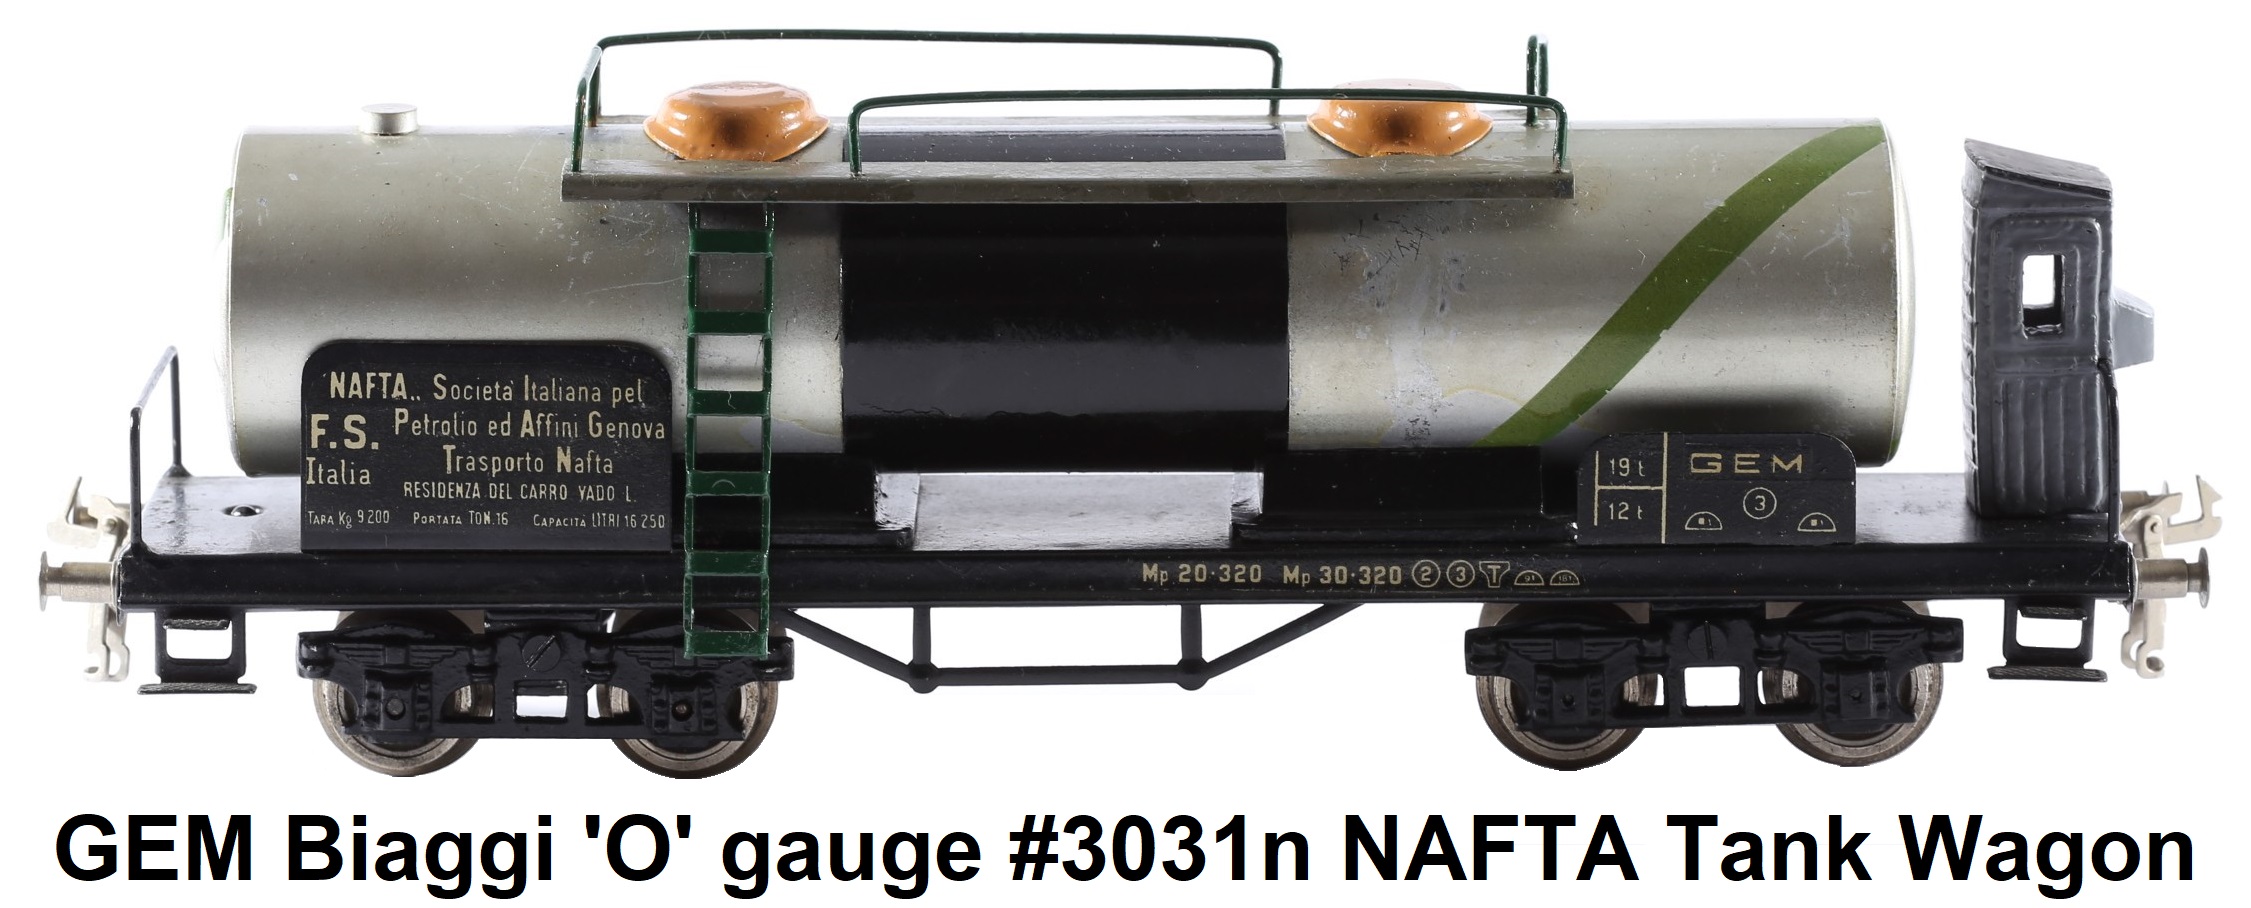 Biaggi 'O' gauge GEM Tinplate Carro-cisterna NAFTA Italy #30310n-1e Tank wagon with brakeman's house